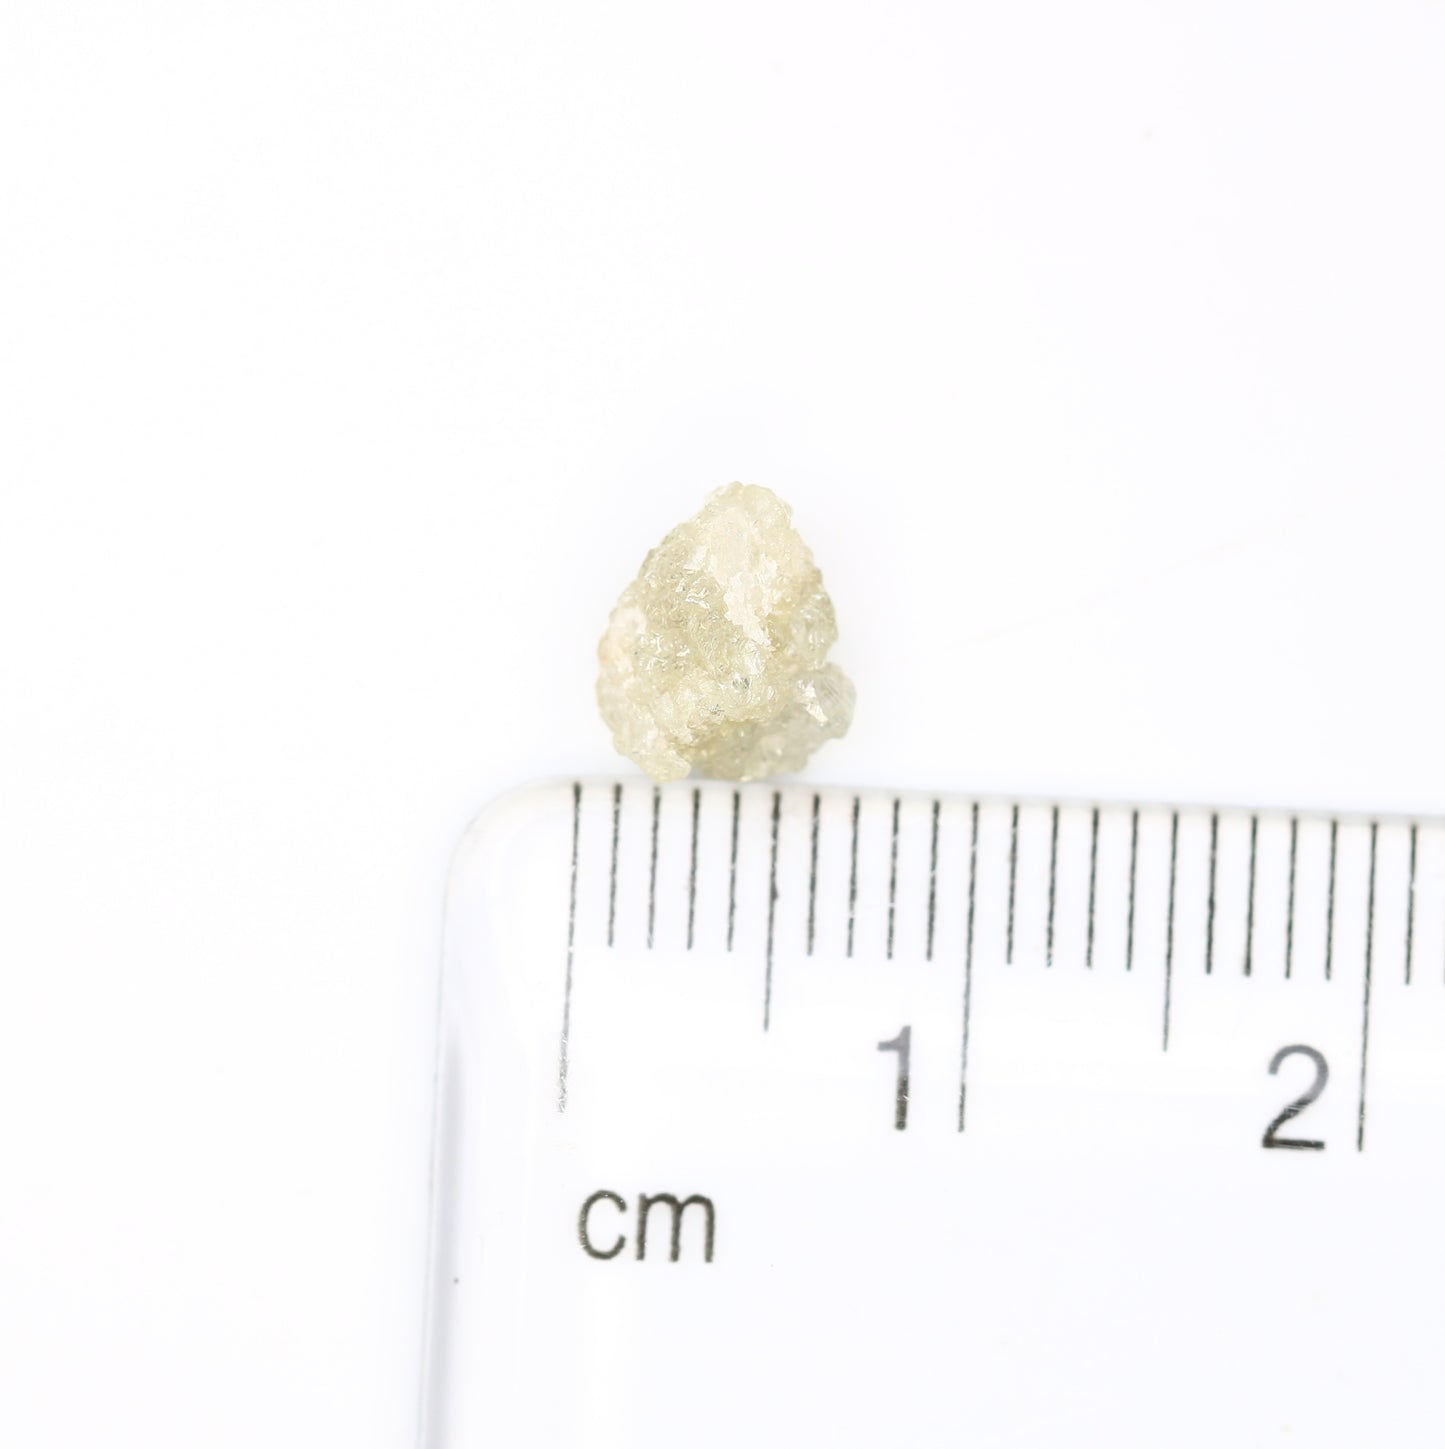 1.38 CT Rough Grey Raw Uncut Irregular Shape Diamond For Engagement Ring